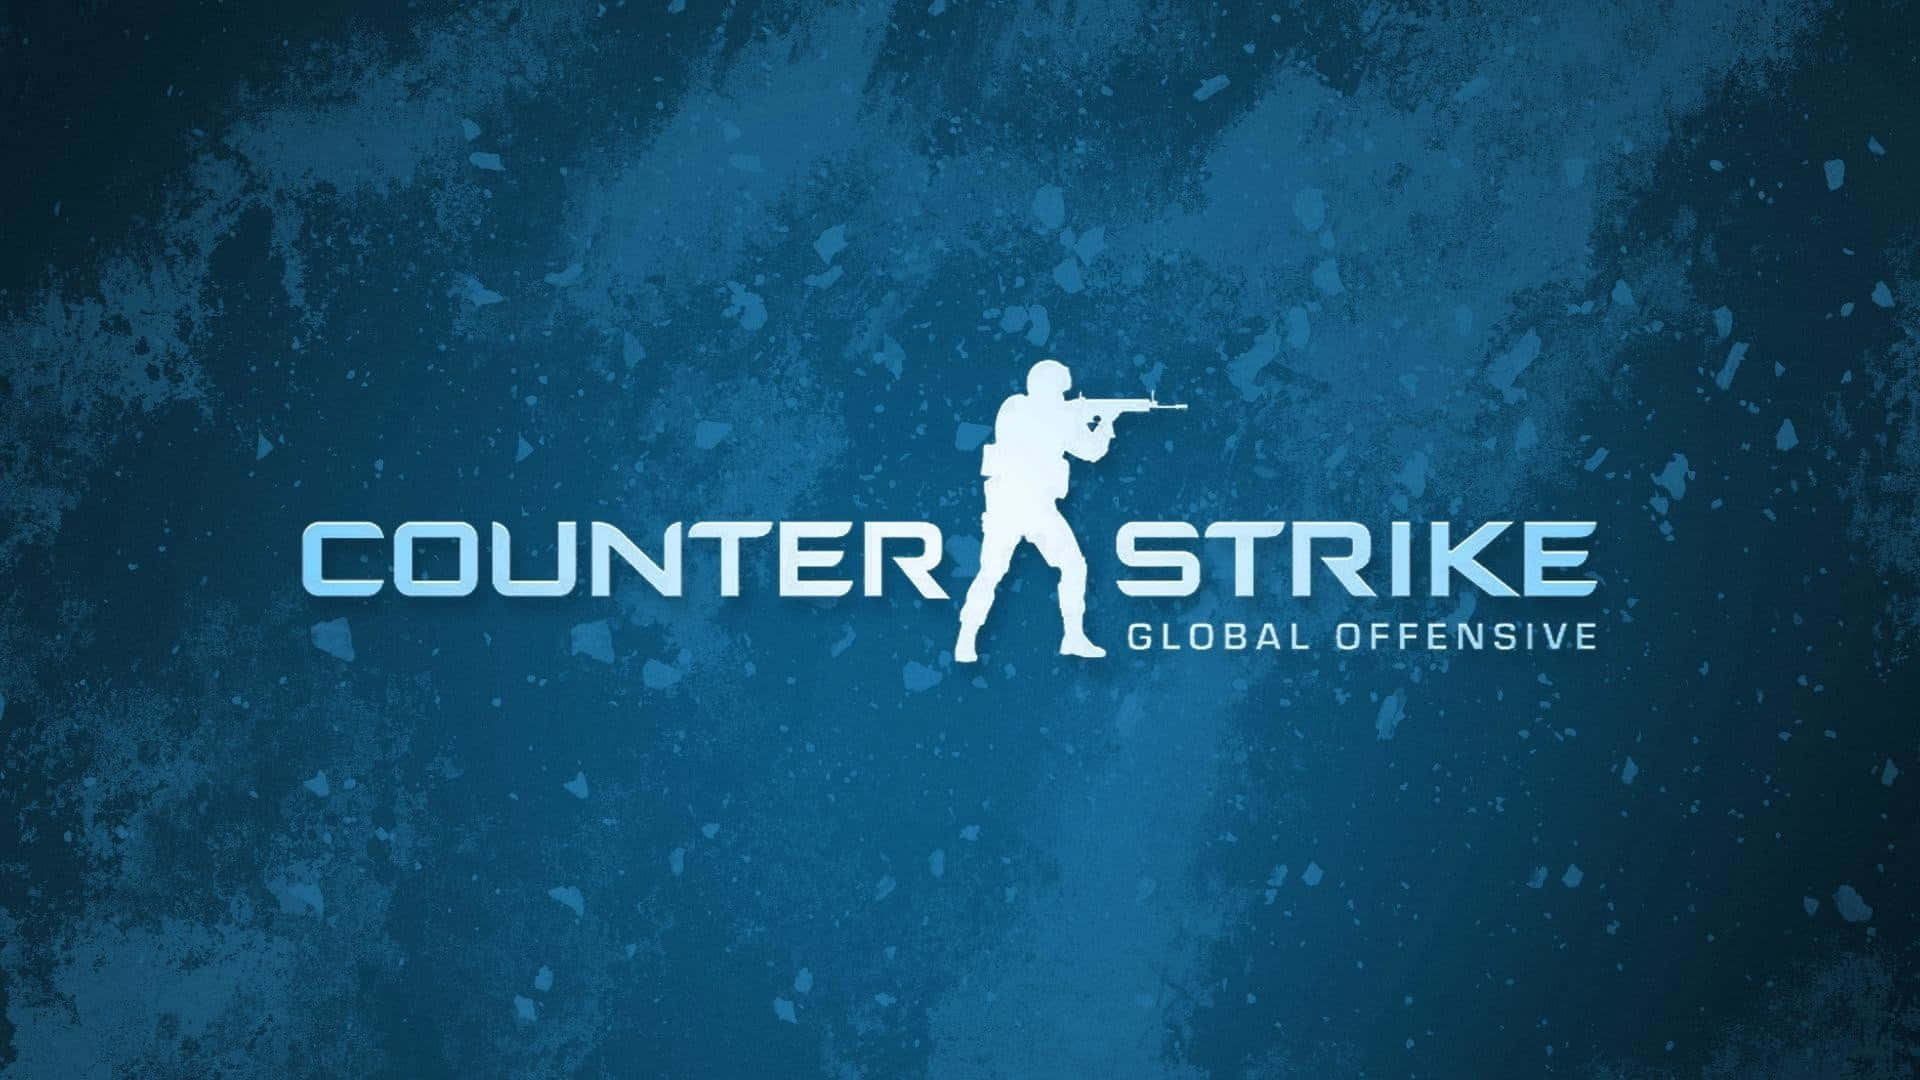 Sfondocounter Strike Global Offensive Blu Polveroso In 1080p.